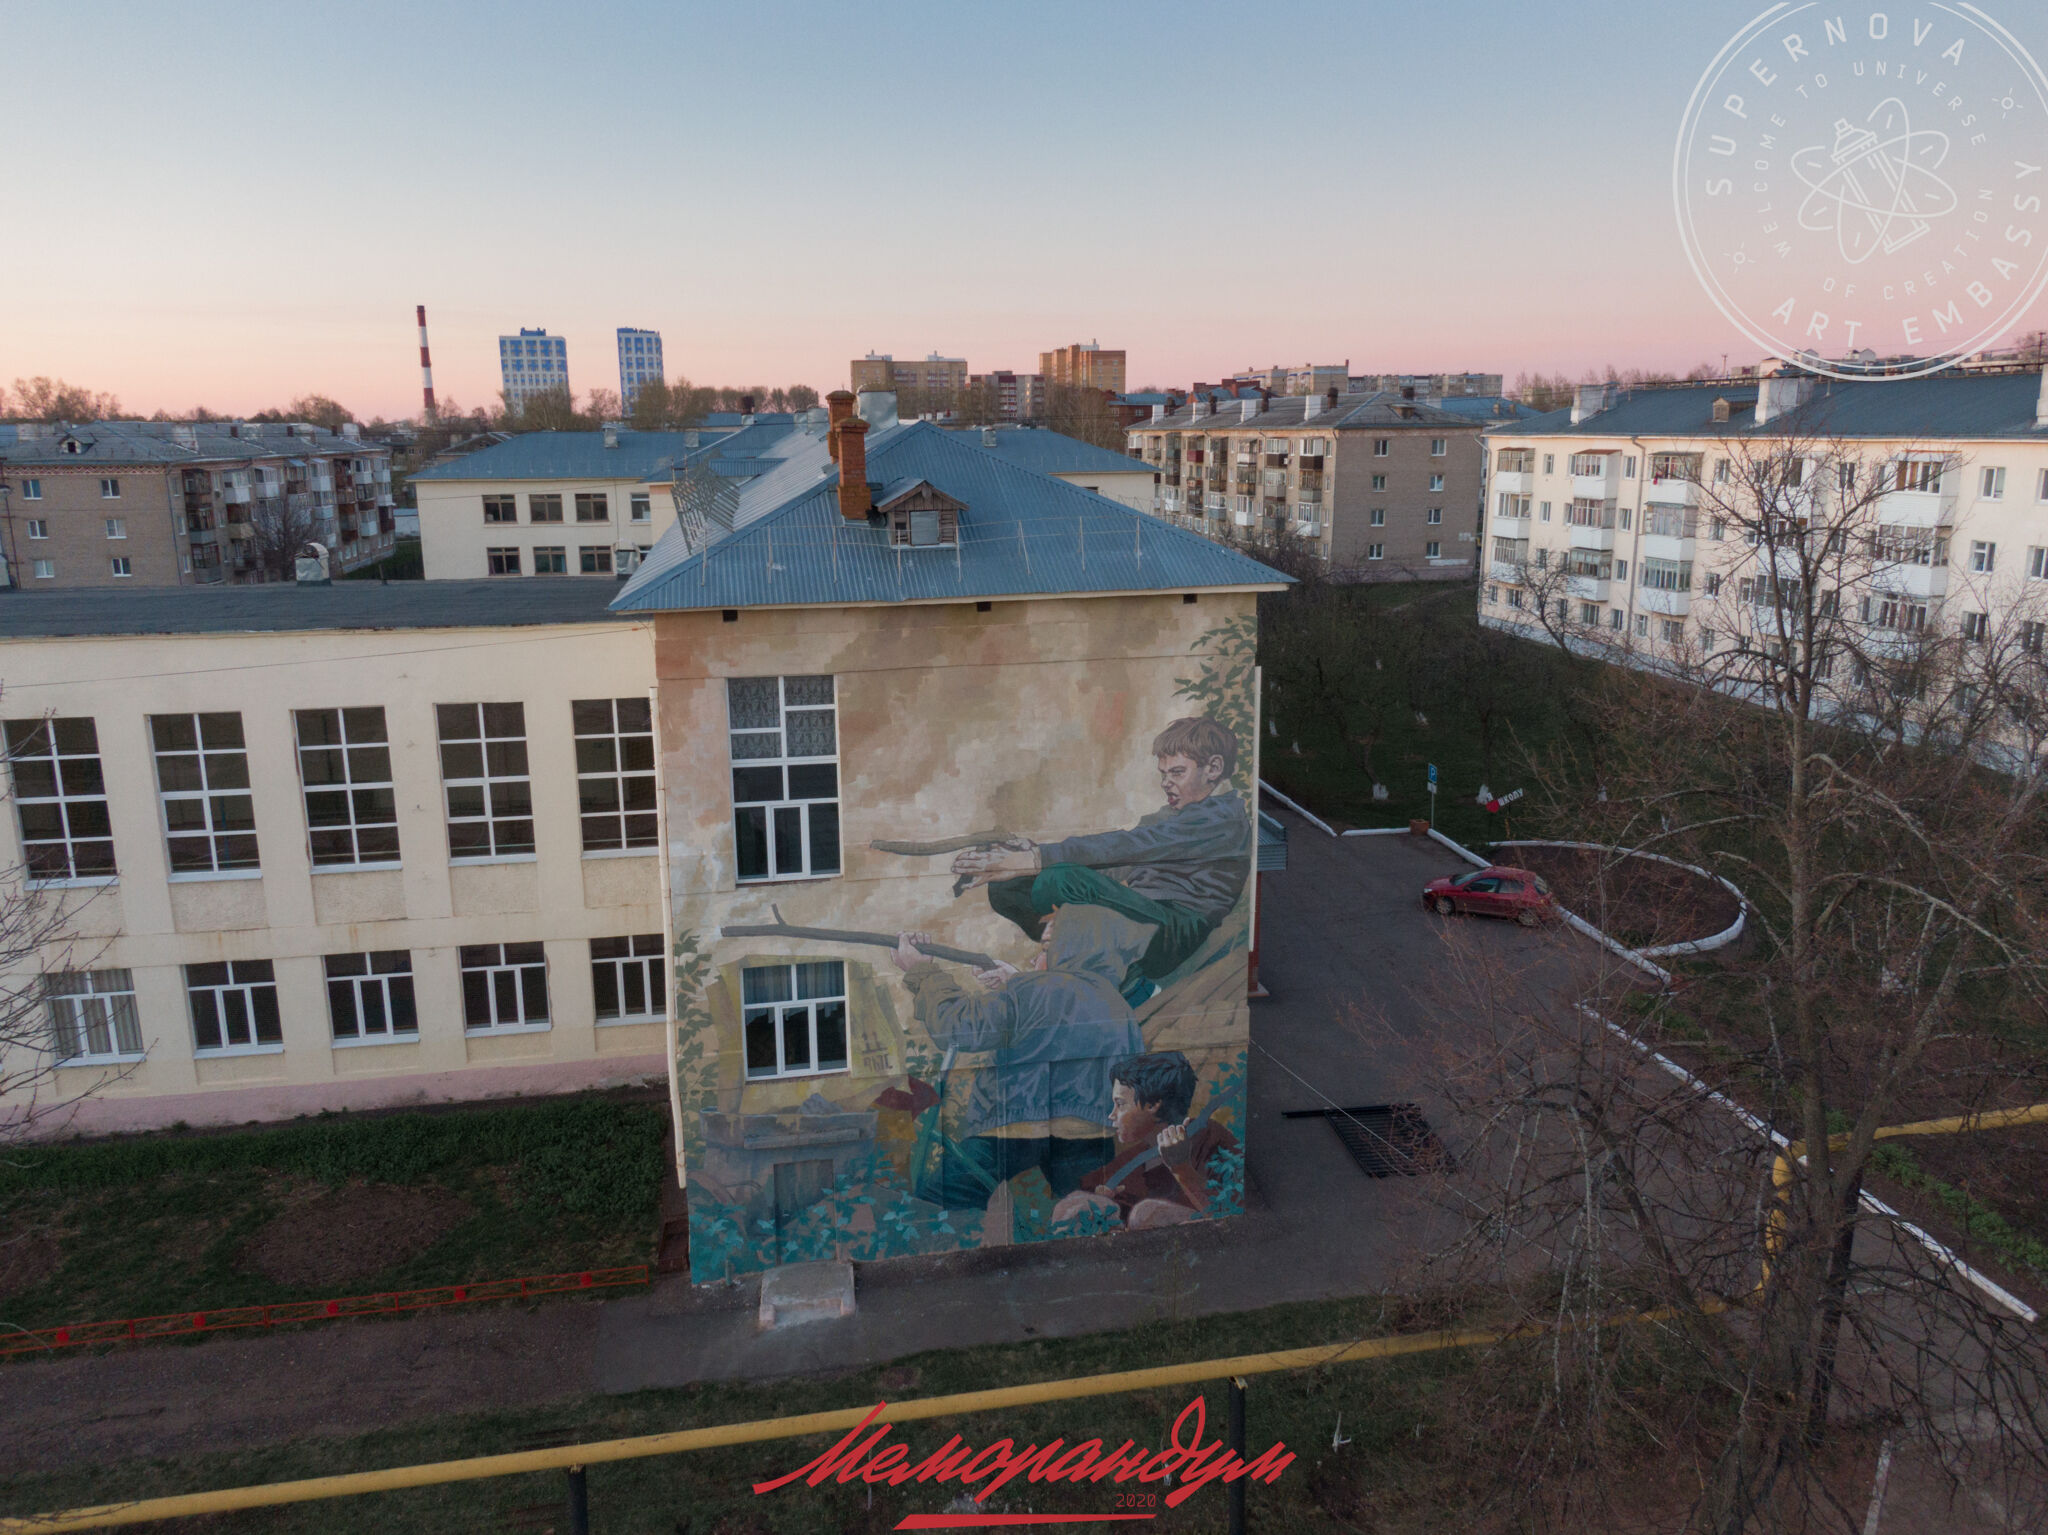 Rustam Qbic&mdash;Memorandum 2020 - Voinushka (Kids War Game) / Diptych by Rustam QBic (Kazan)